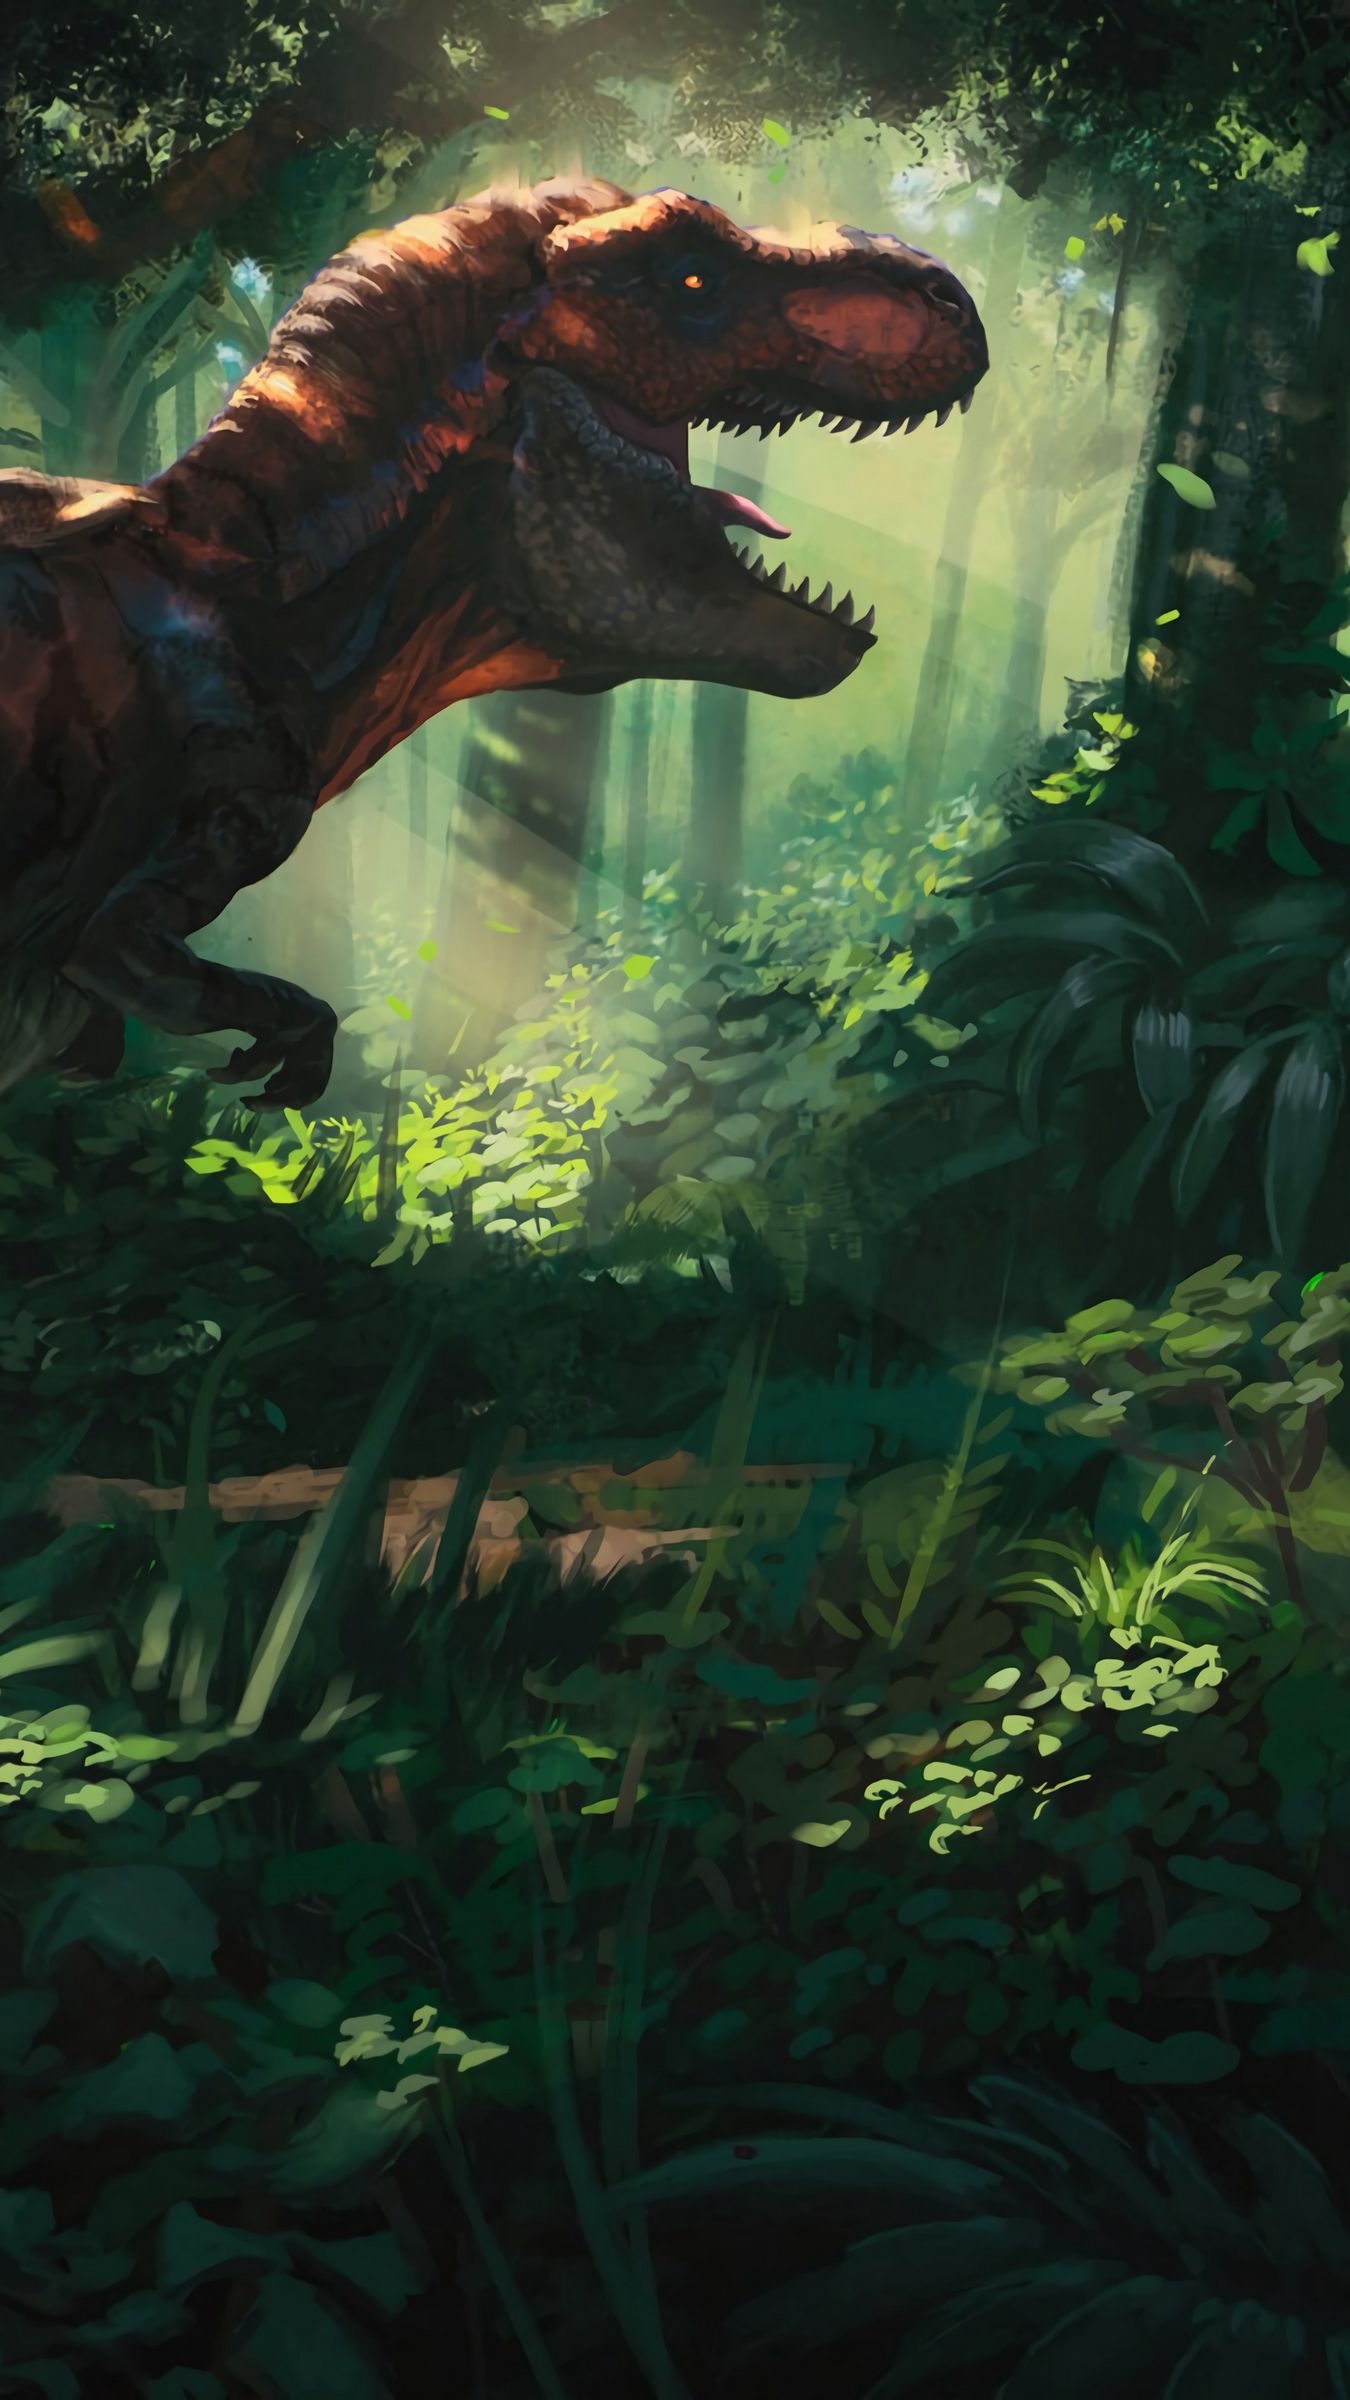 Download wallpaper 1350x2400 tyrannosaurus dinosaur jungle